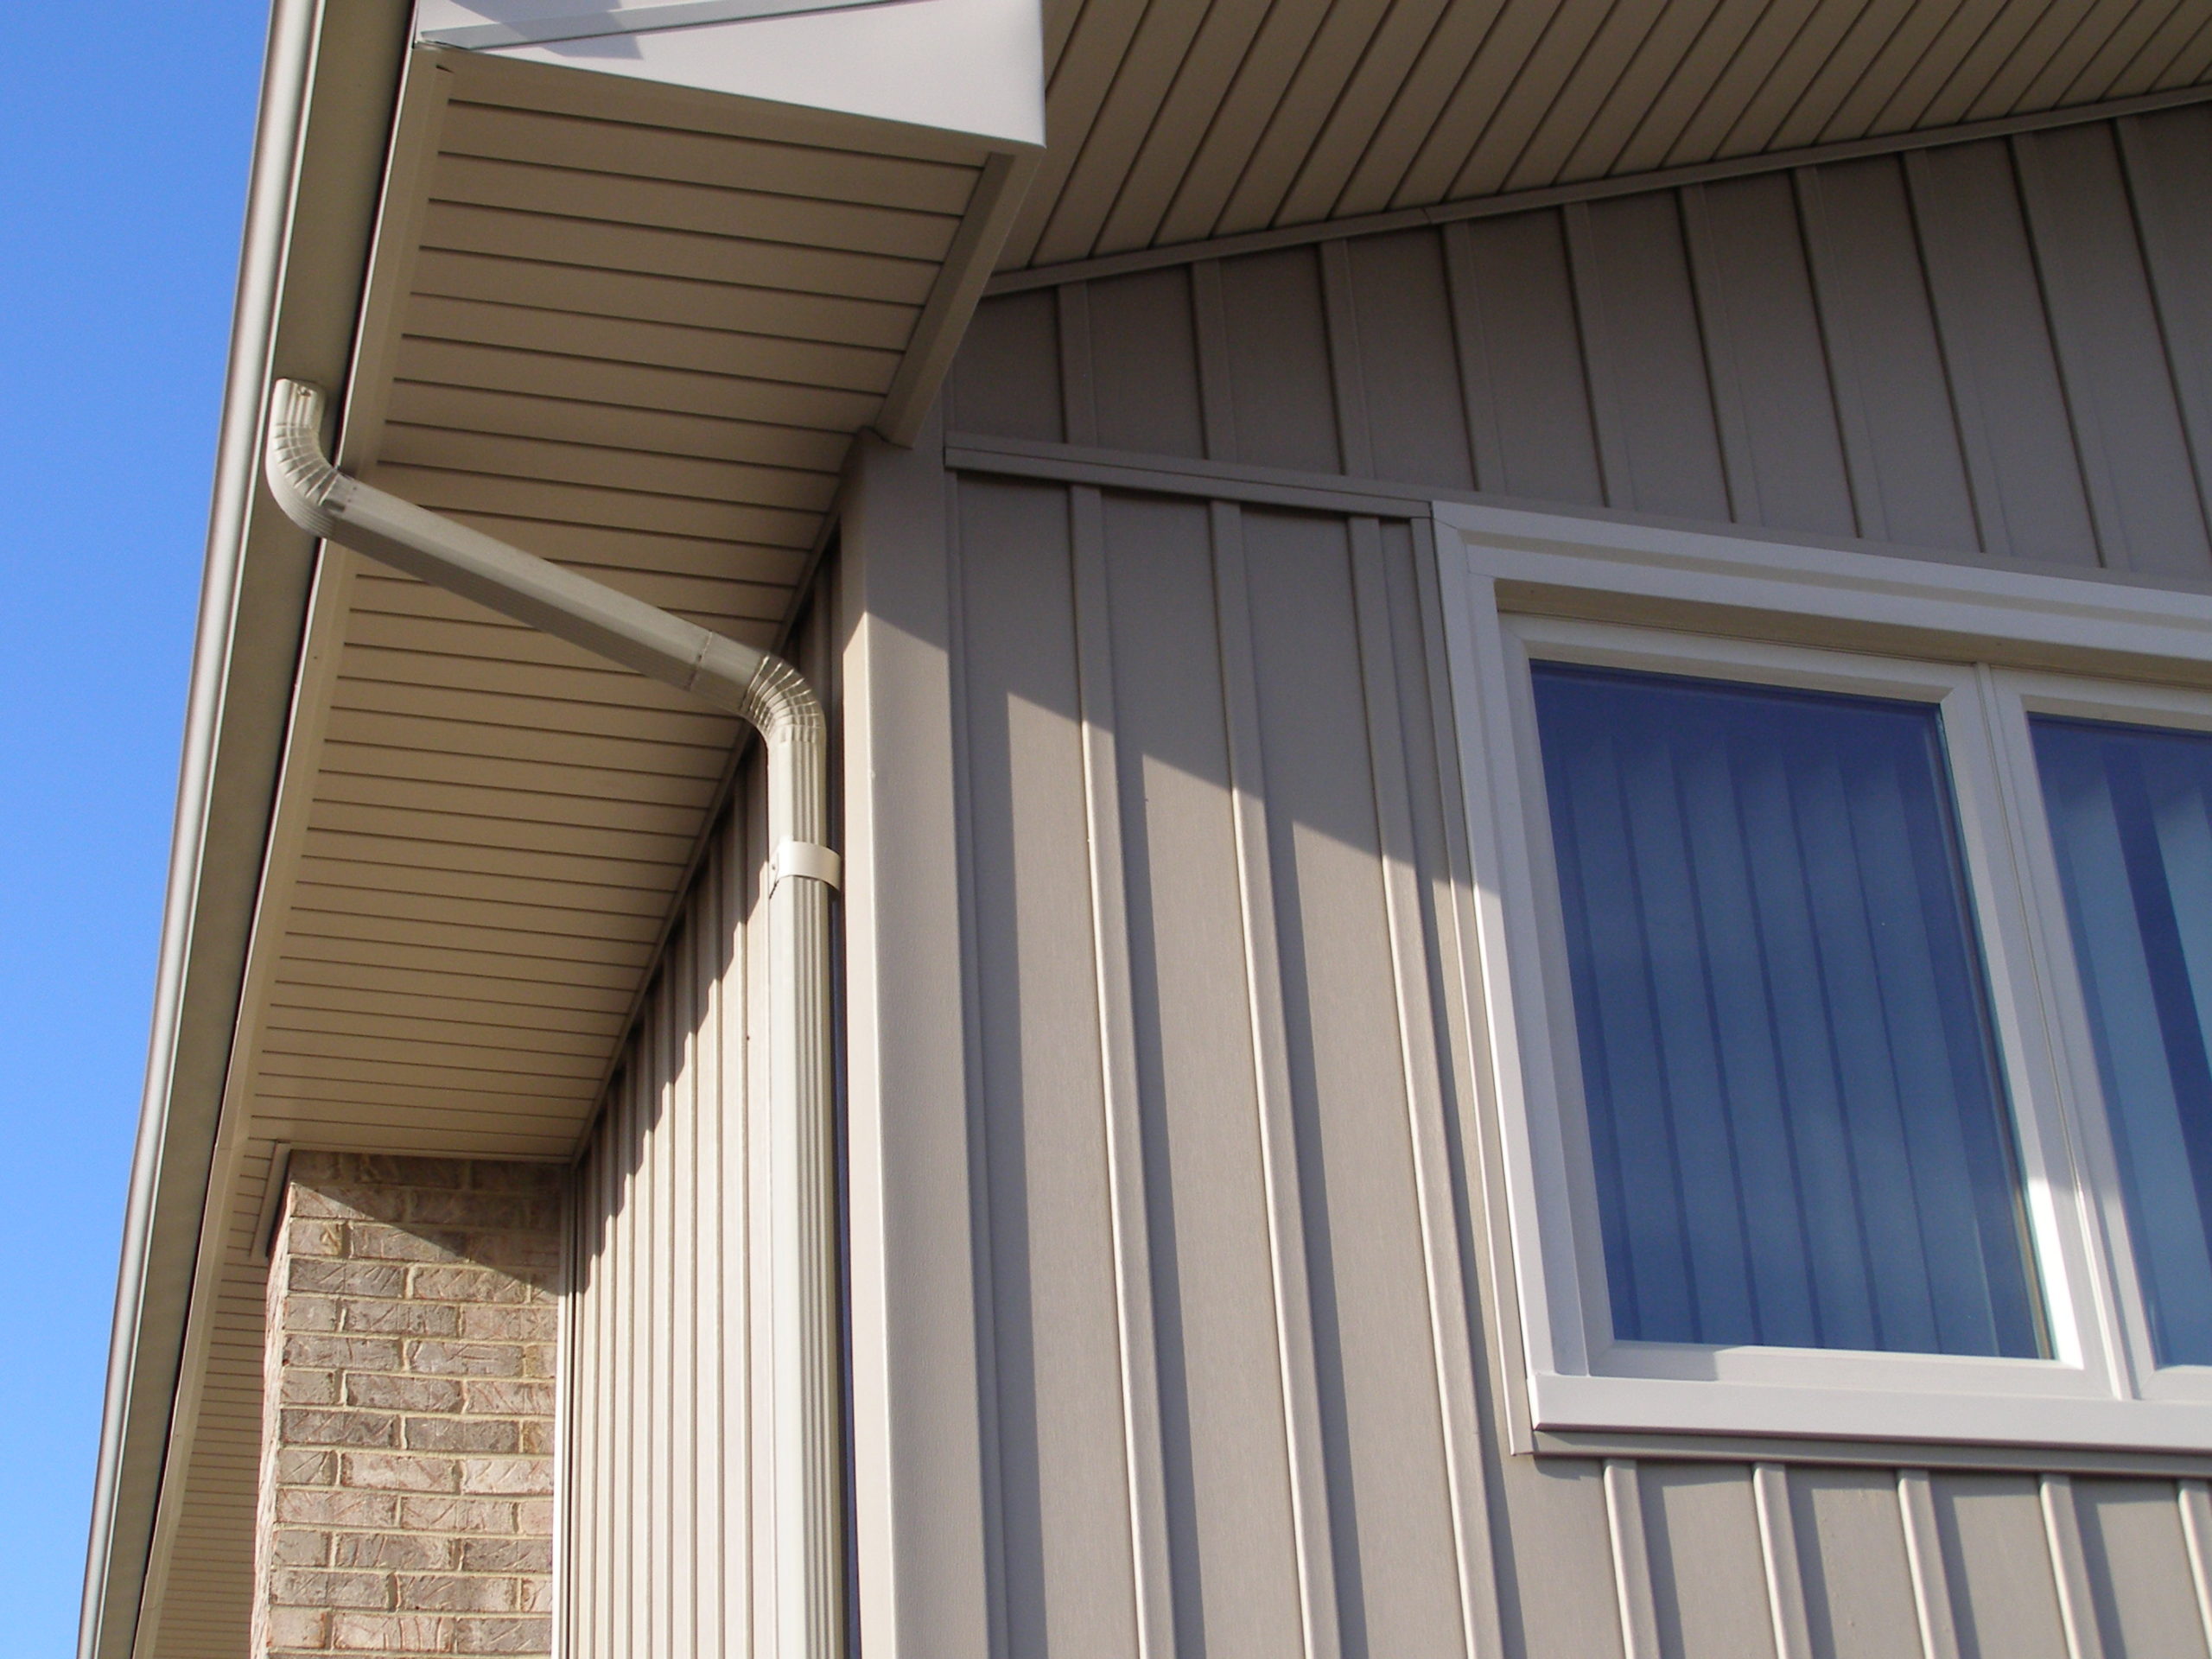 Siding Windows Doors Roofing Complete Exterior System I Exterior Classic Style Board Batten Premium Vertical Vinyl Siding